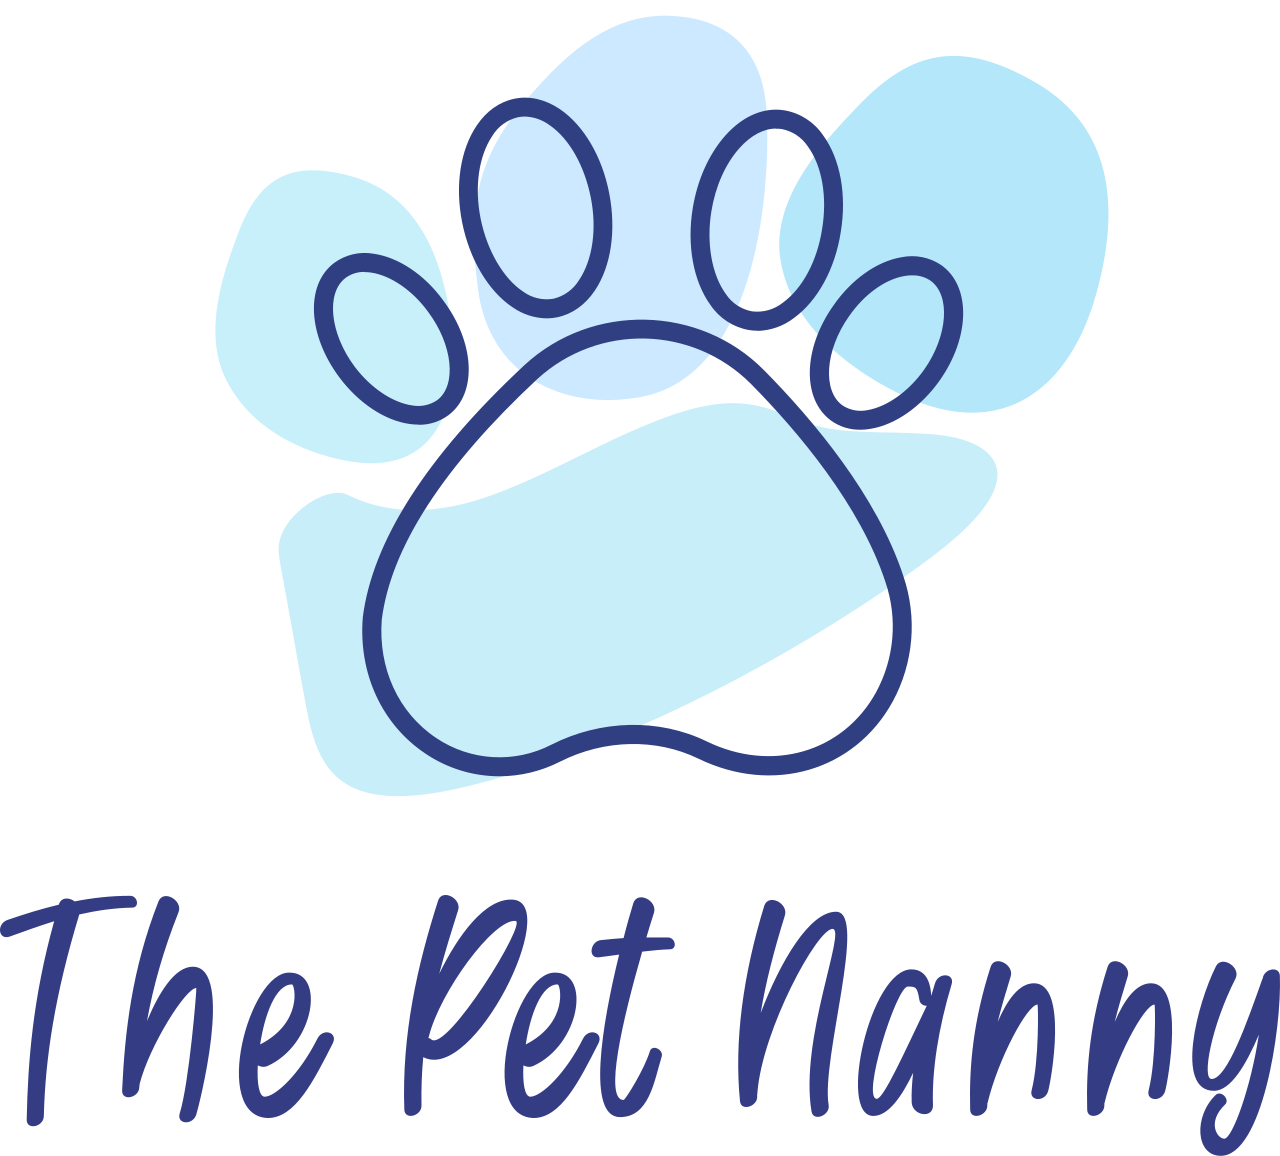 The Pet Nanny's logo